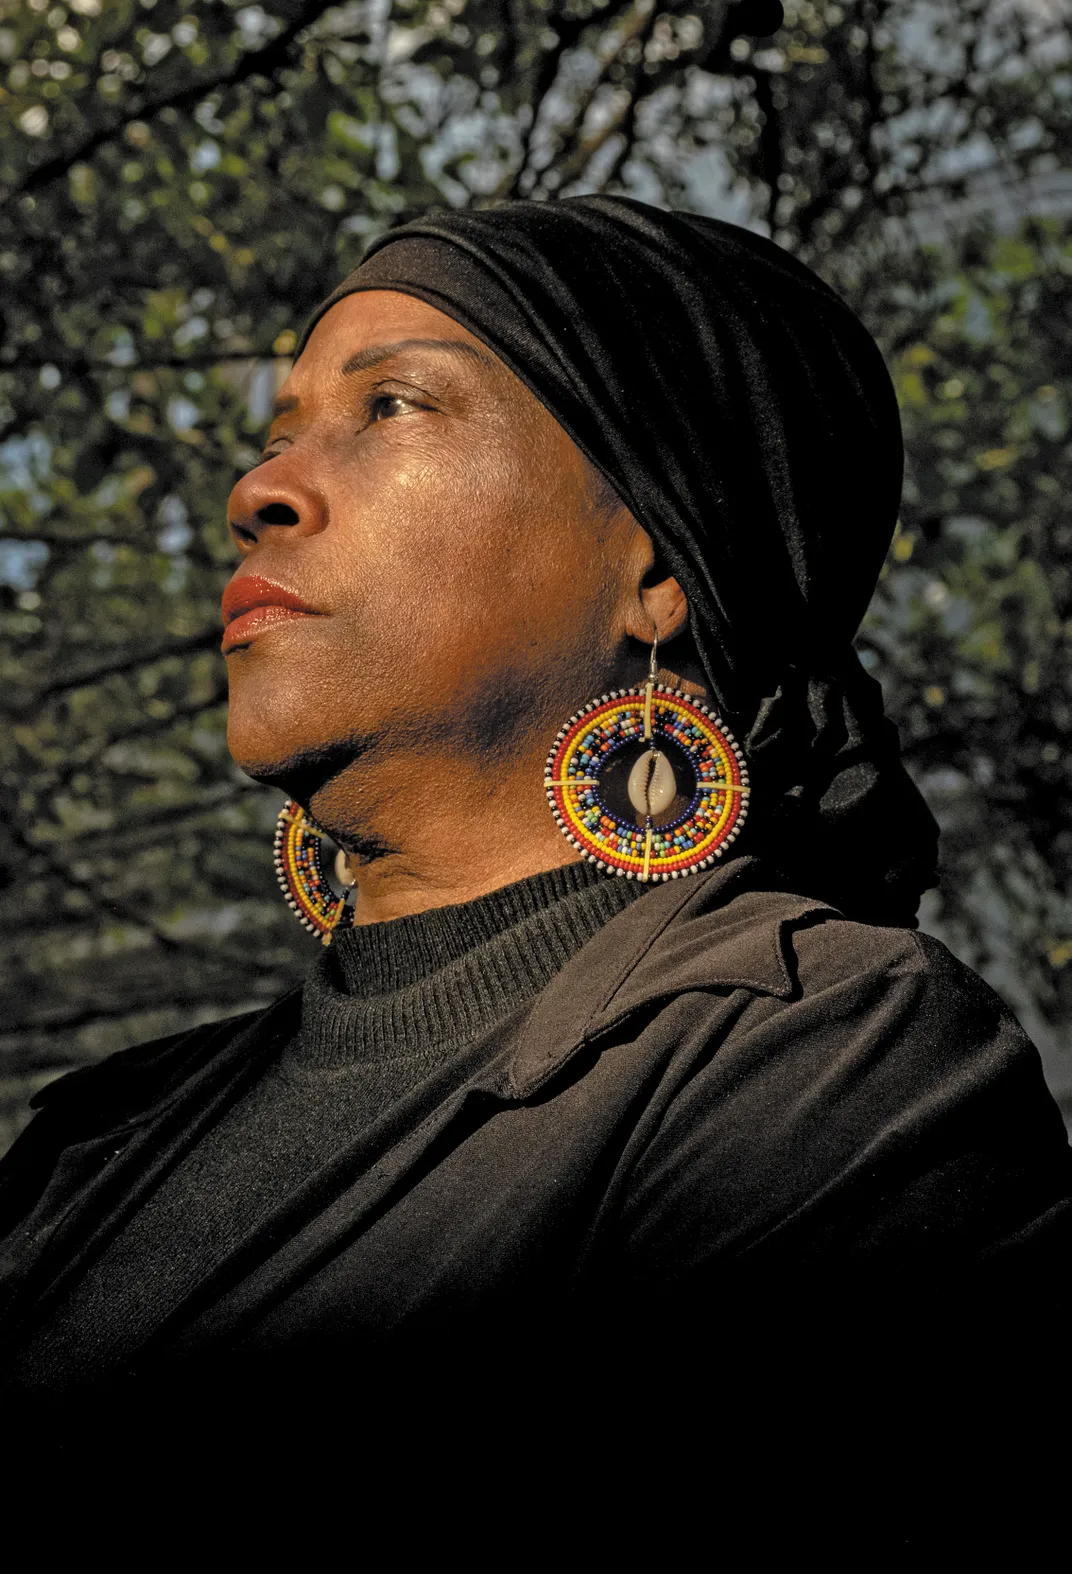 a women wearing a black head wrap stands for a portrait